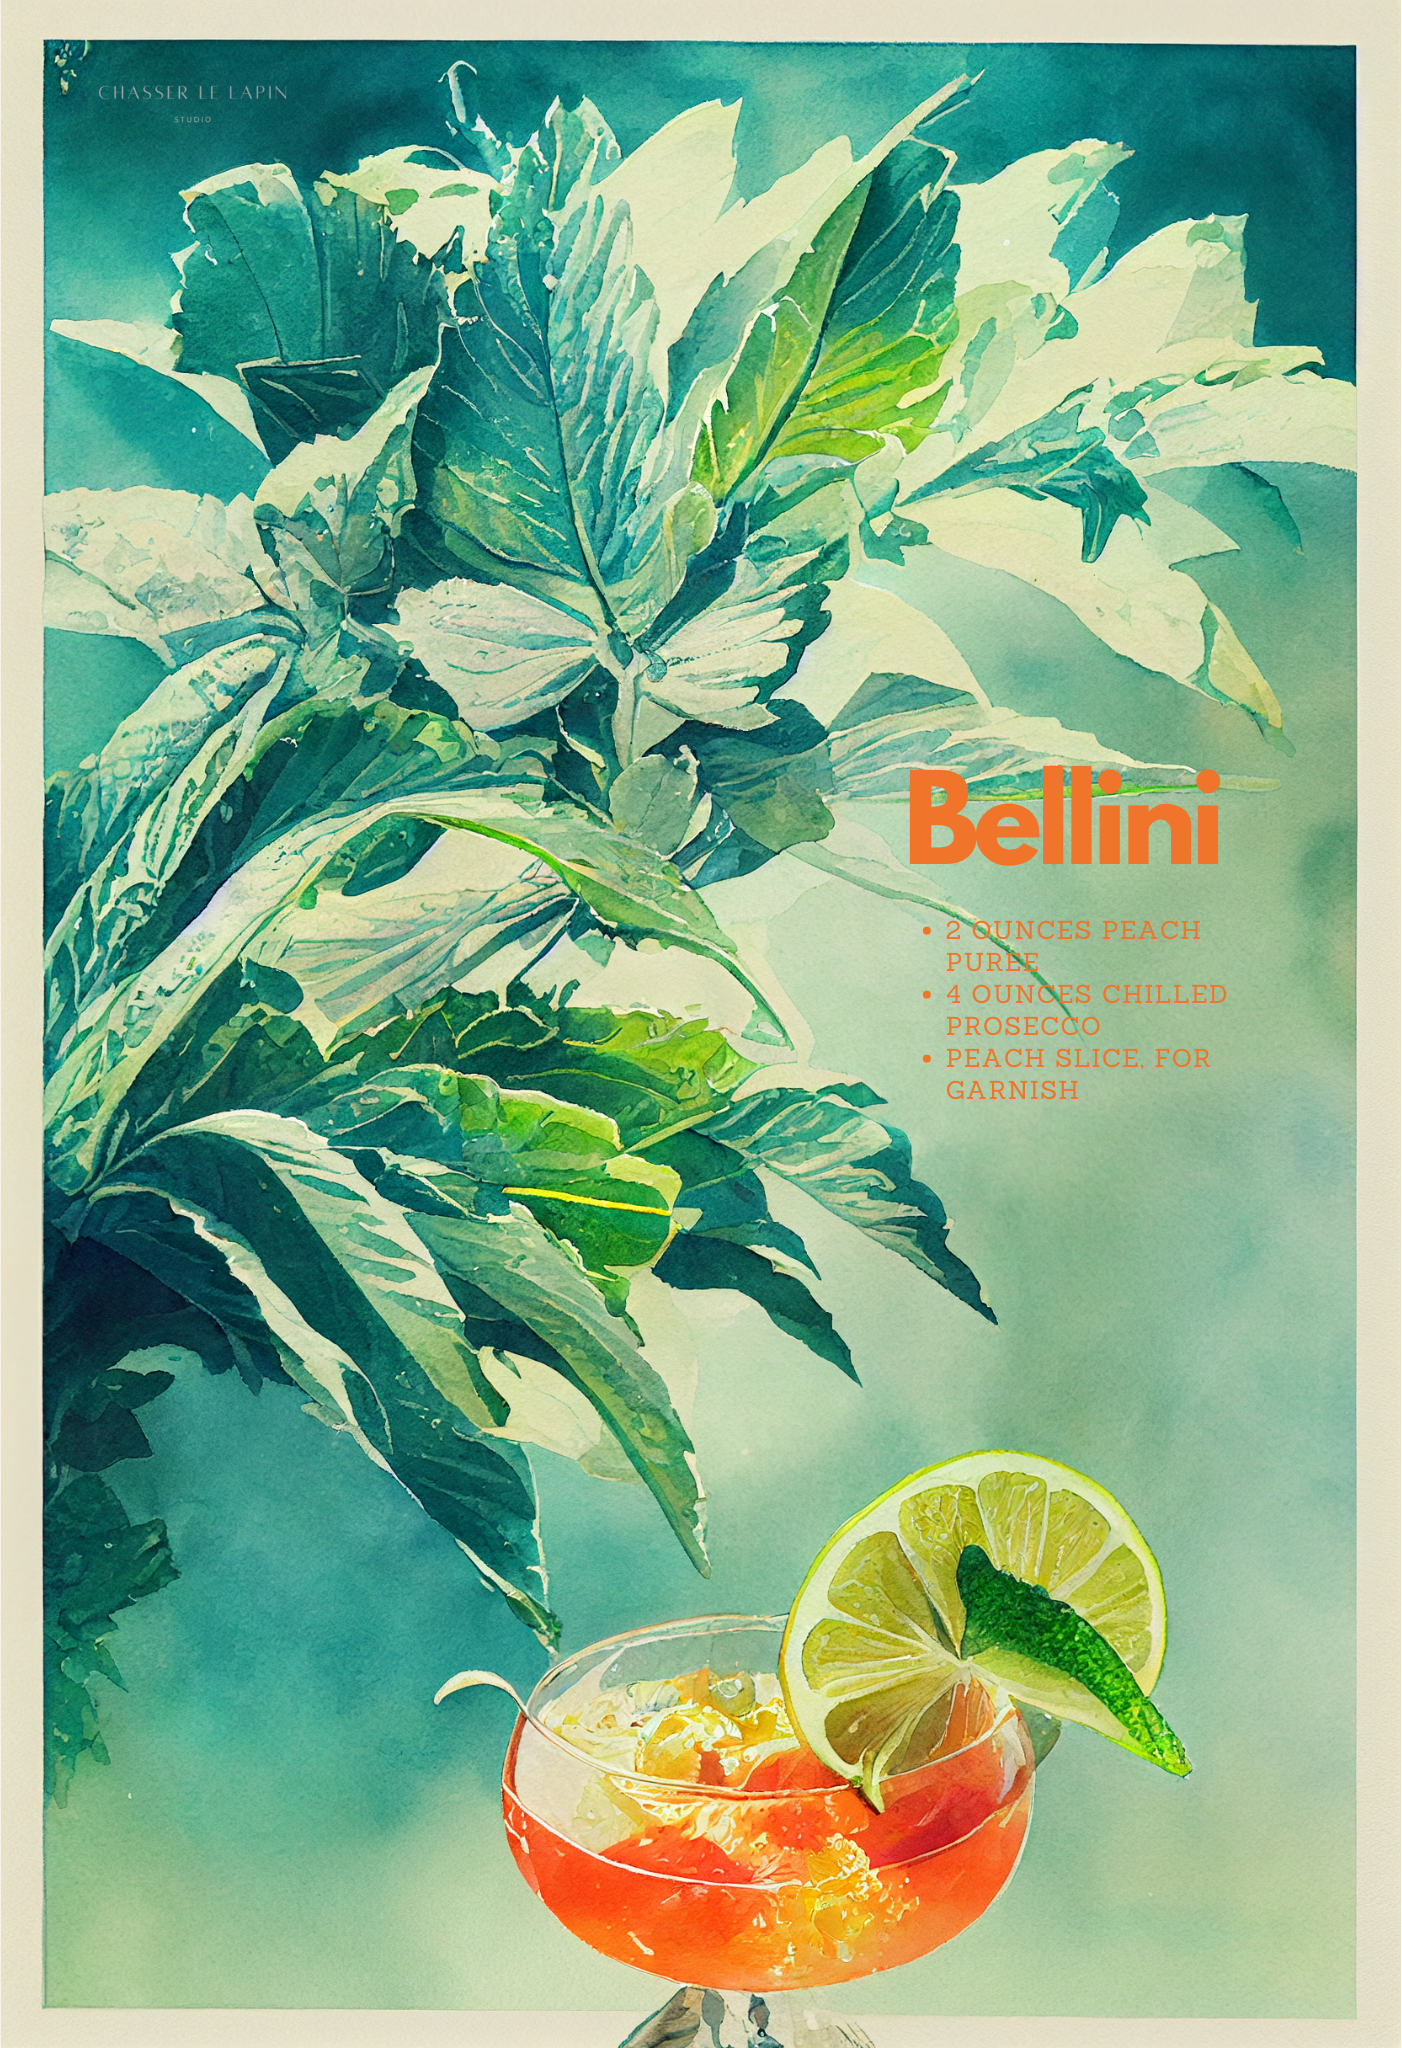 Bellini Cocktail/ Digital artwork in watercolor style print on Premium Canvas